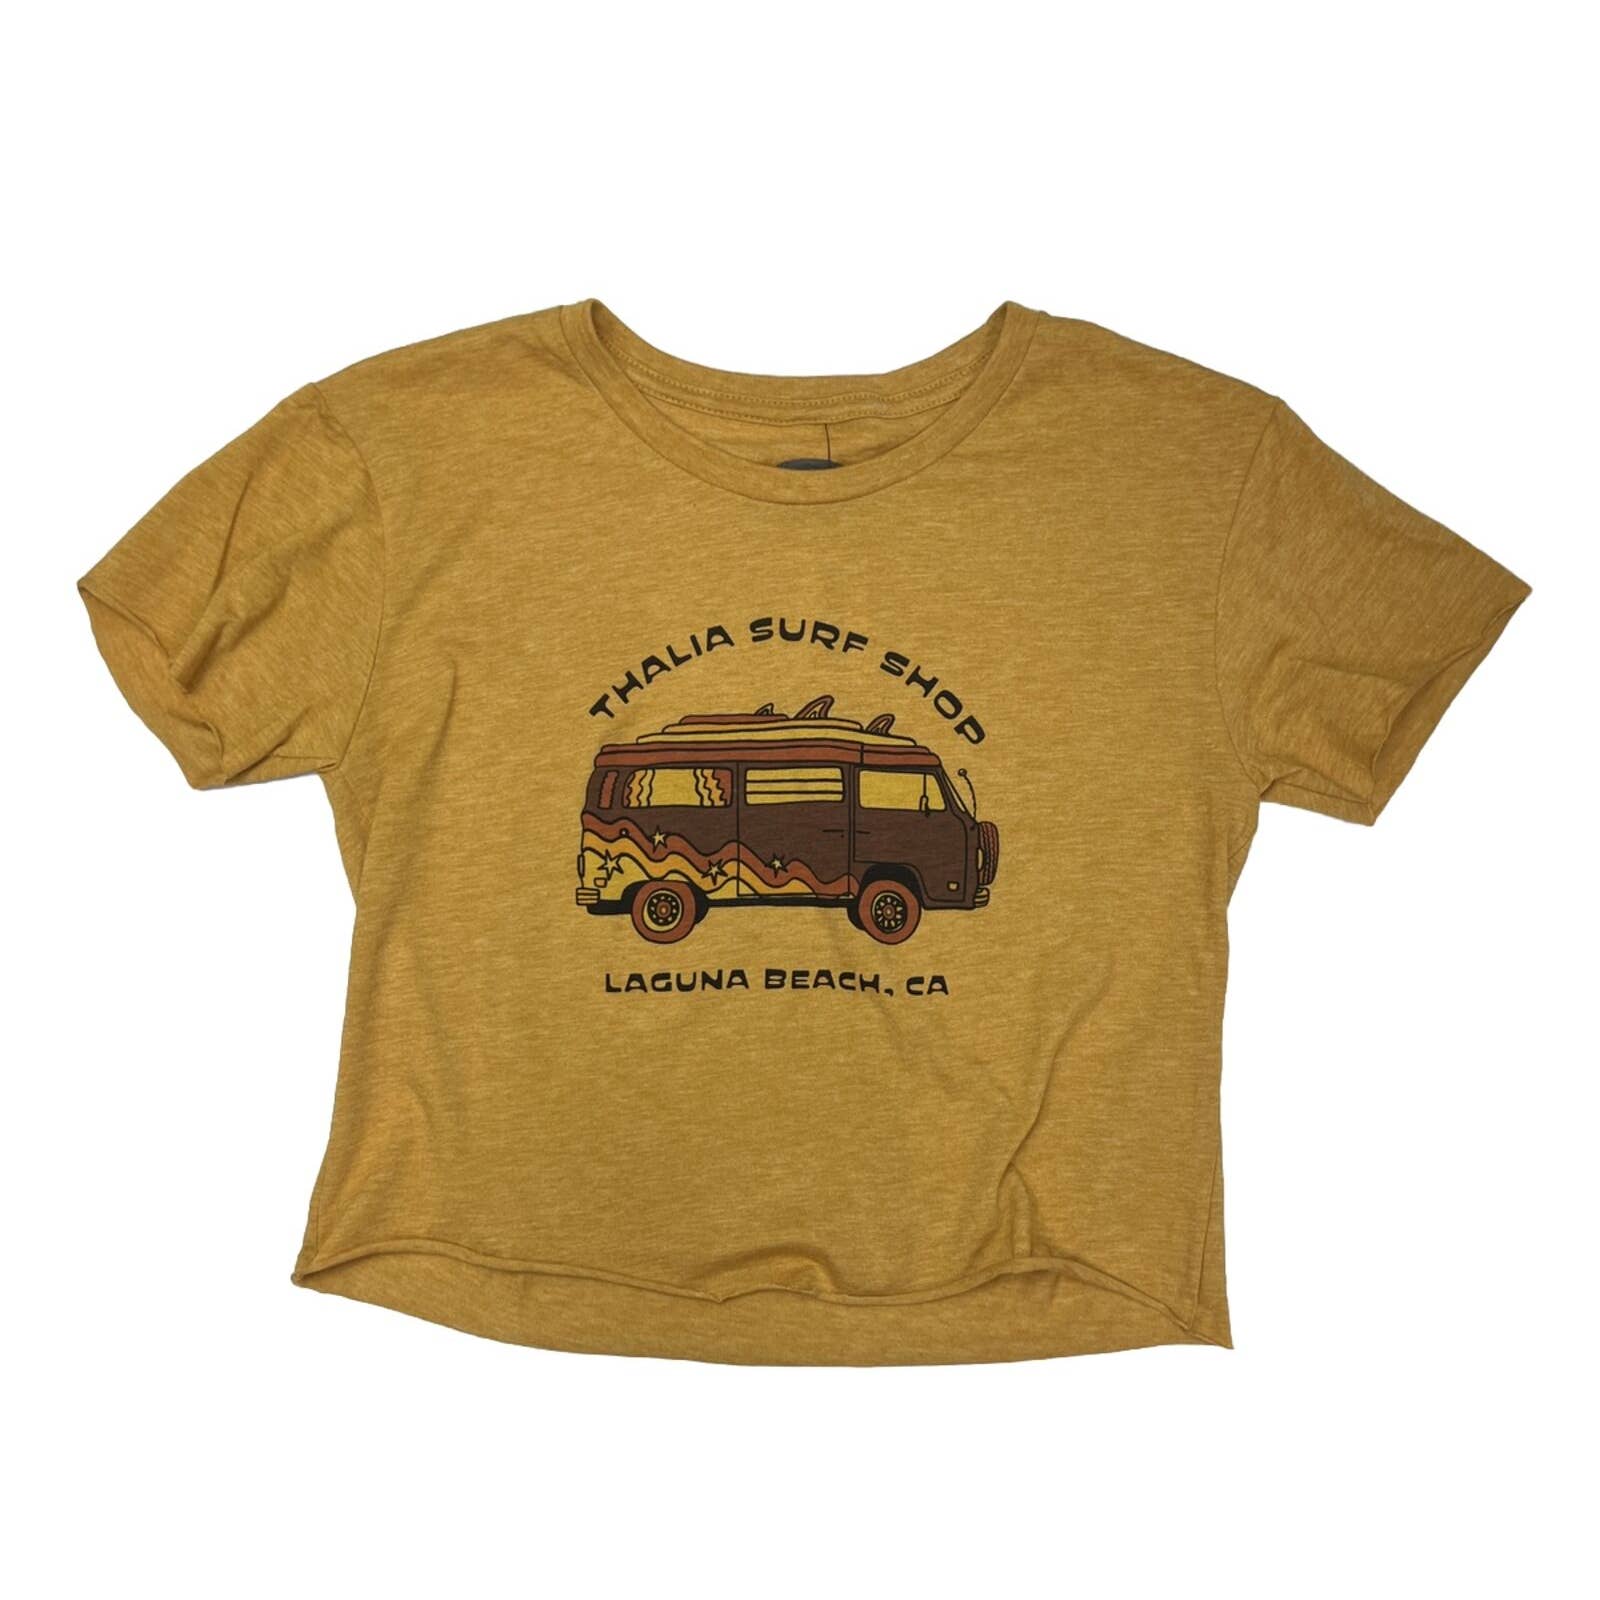 Thalia Surf Shop California 70”s Bus Cropped Tshirt Womens XS Short Sleeve Tee